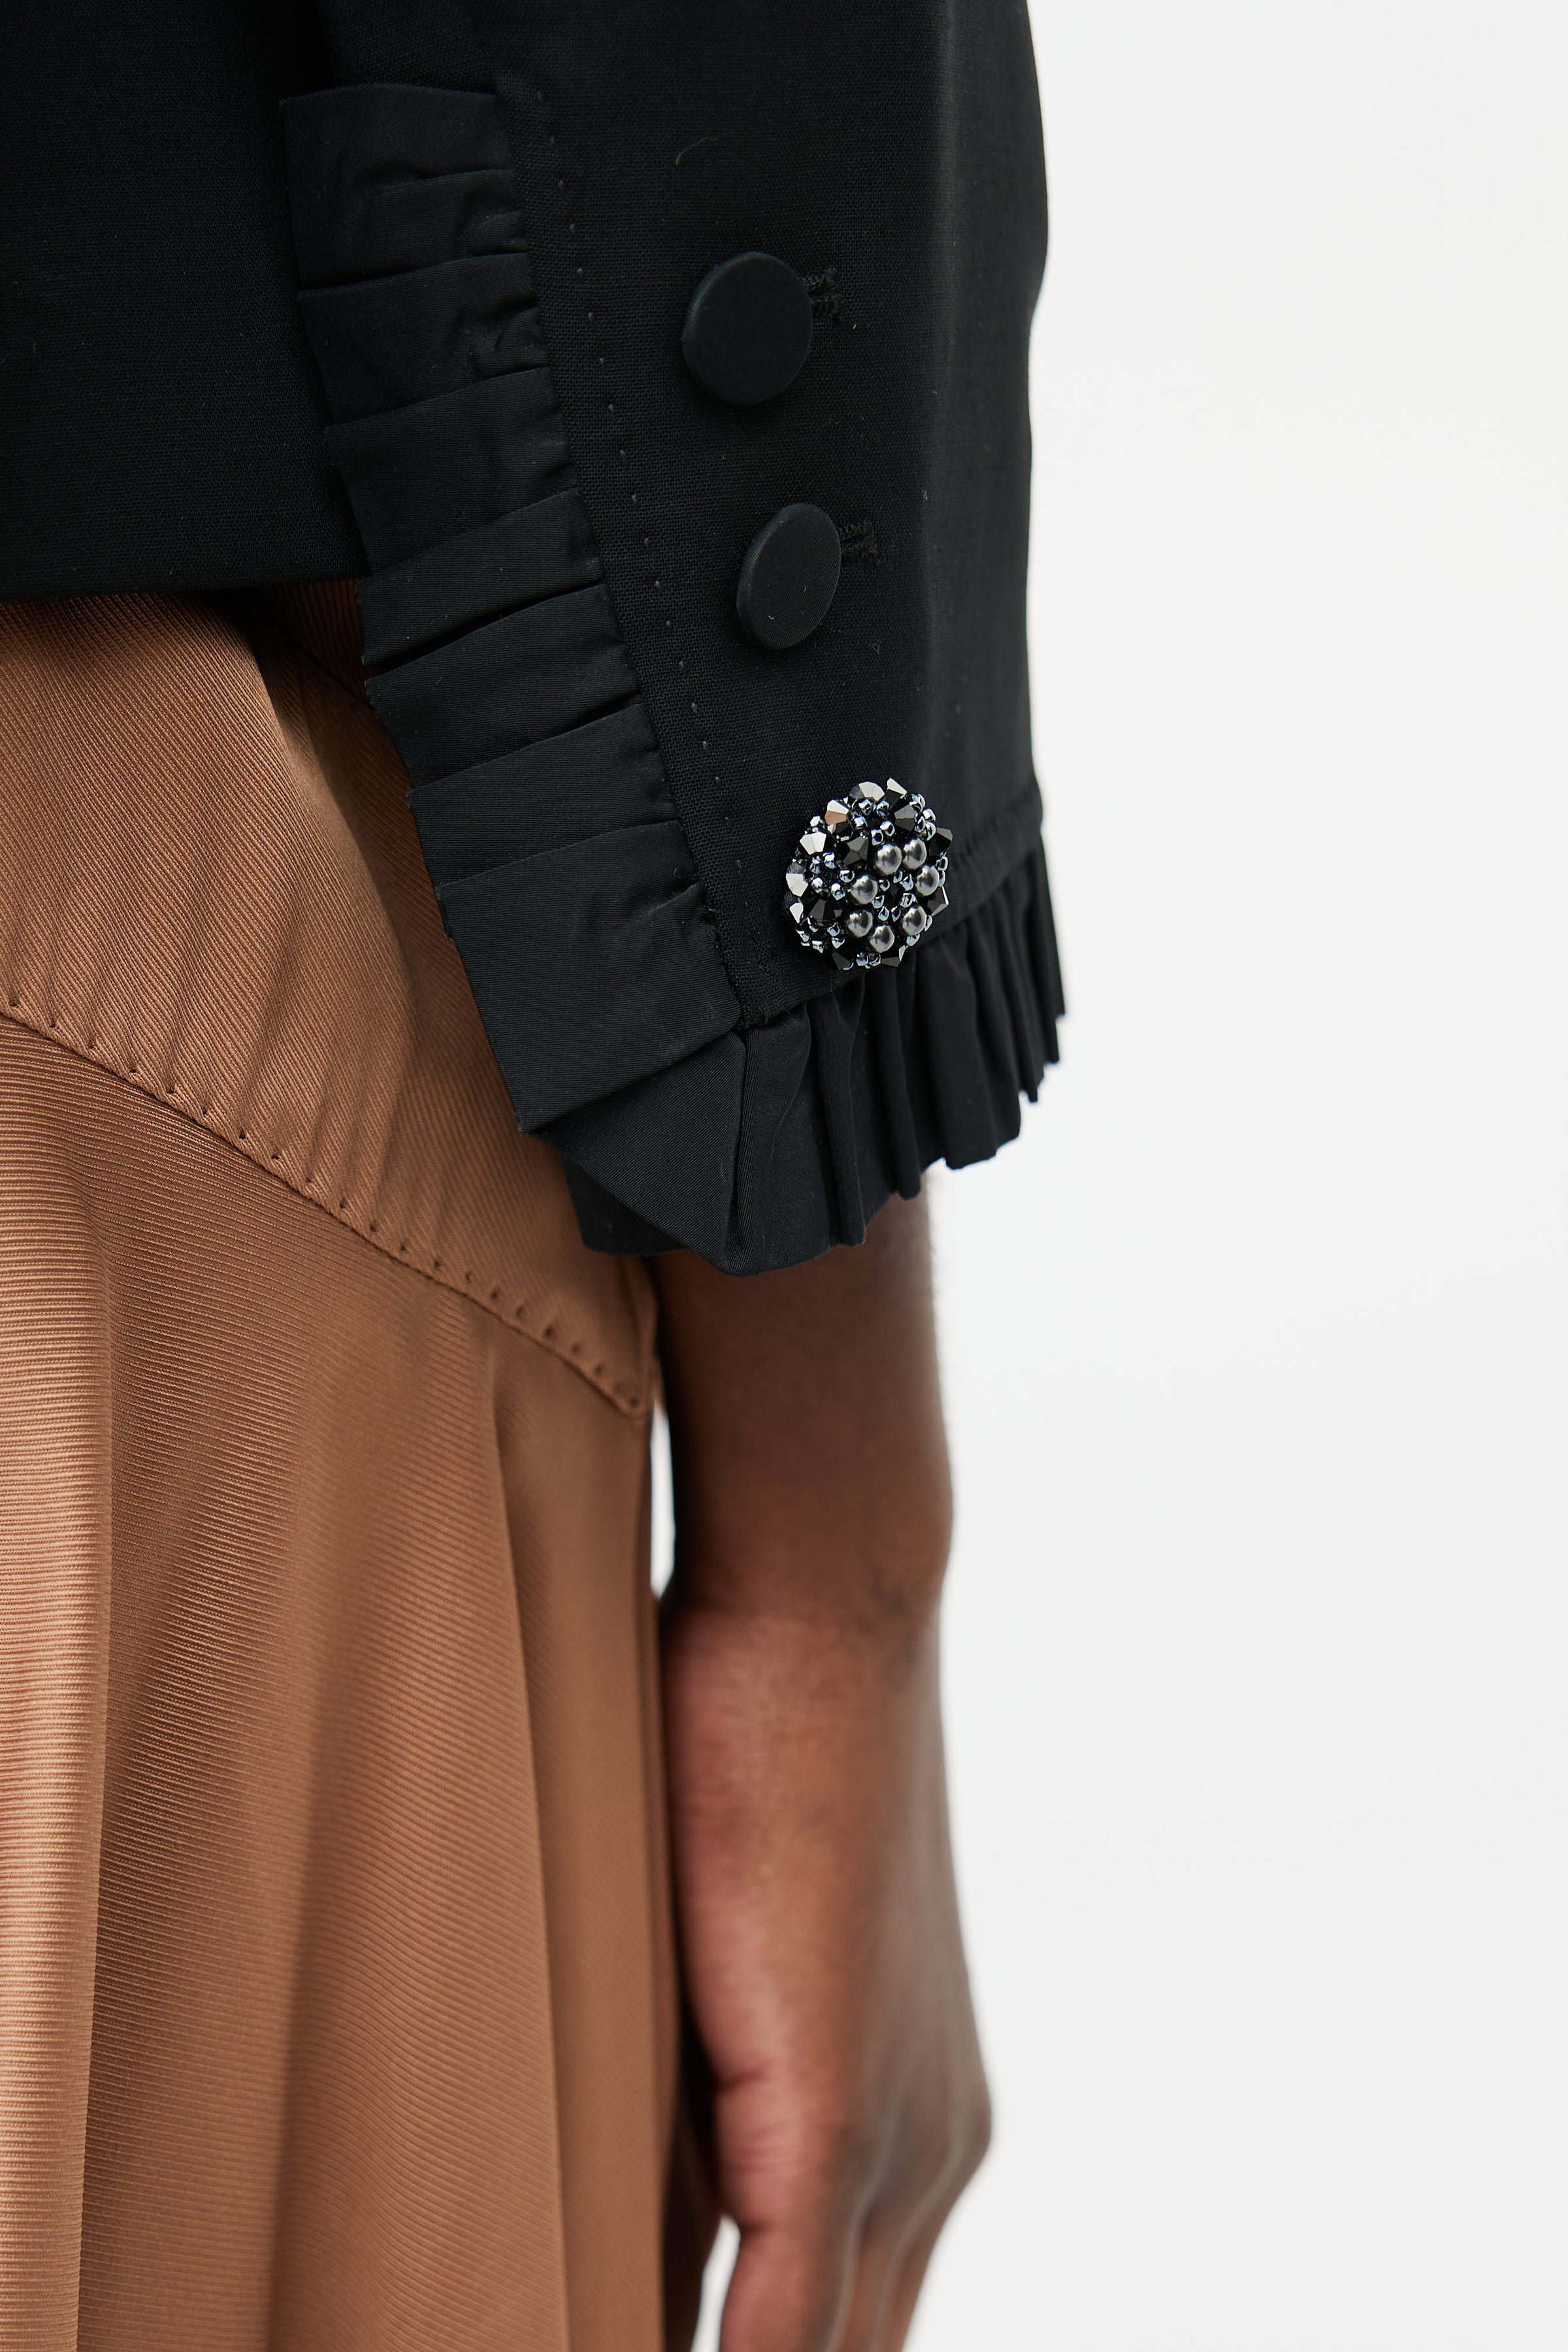 Louis Vuitton - New 2PC Black Blazer & Dress Pants with Satin Trim - F –  LUXHAVE